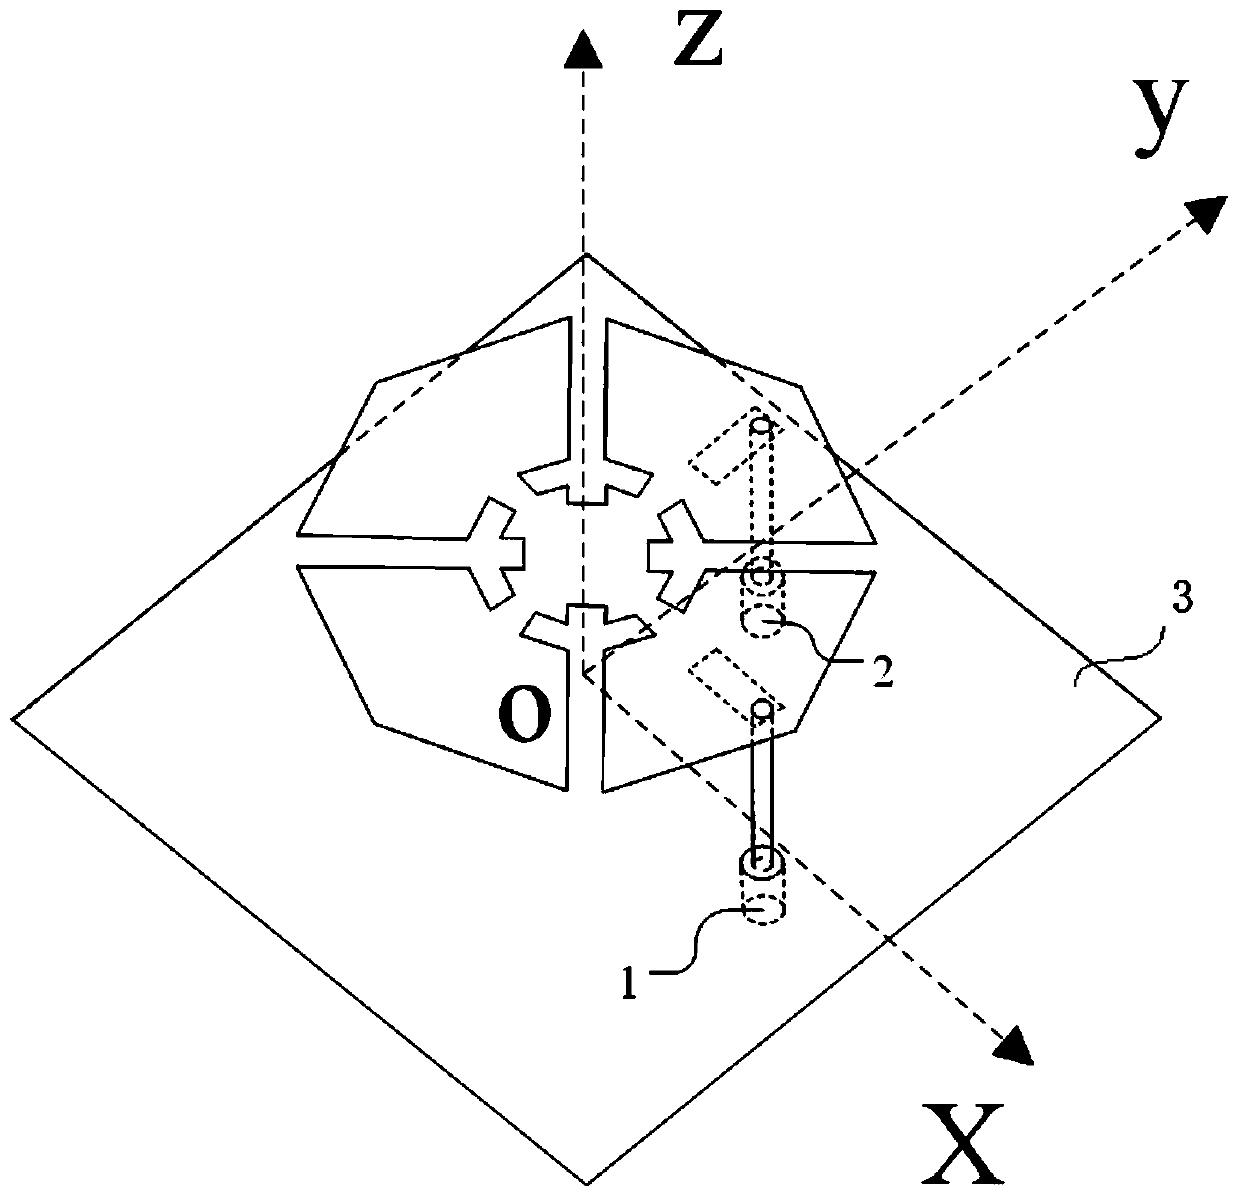 Series-feed circularly-polarized antenna normal array